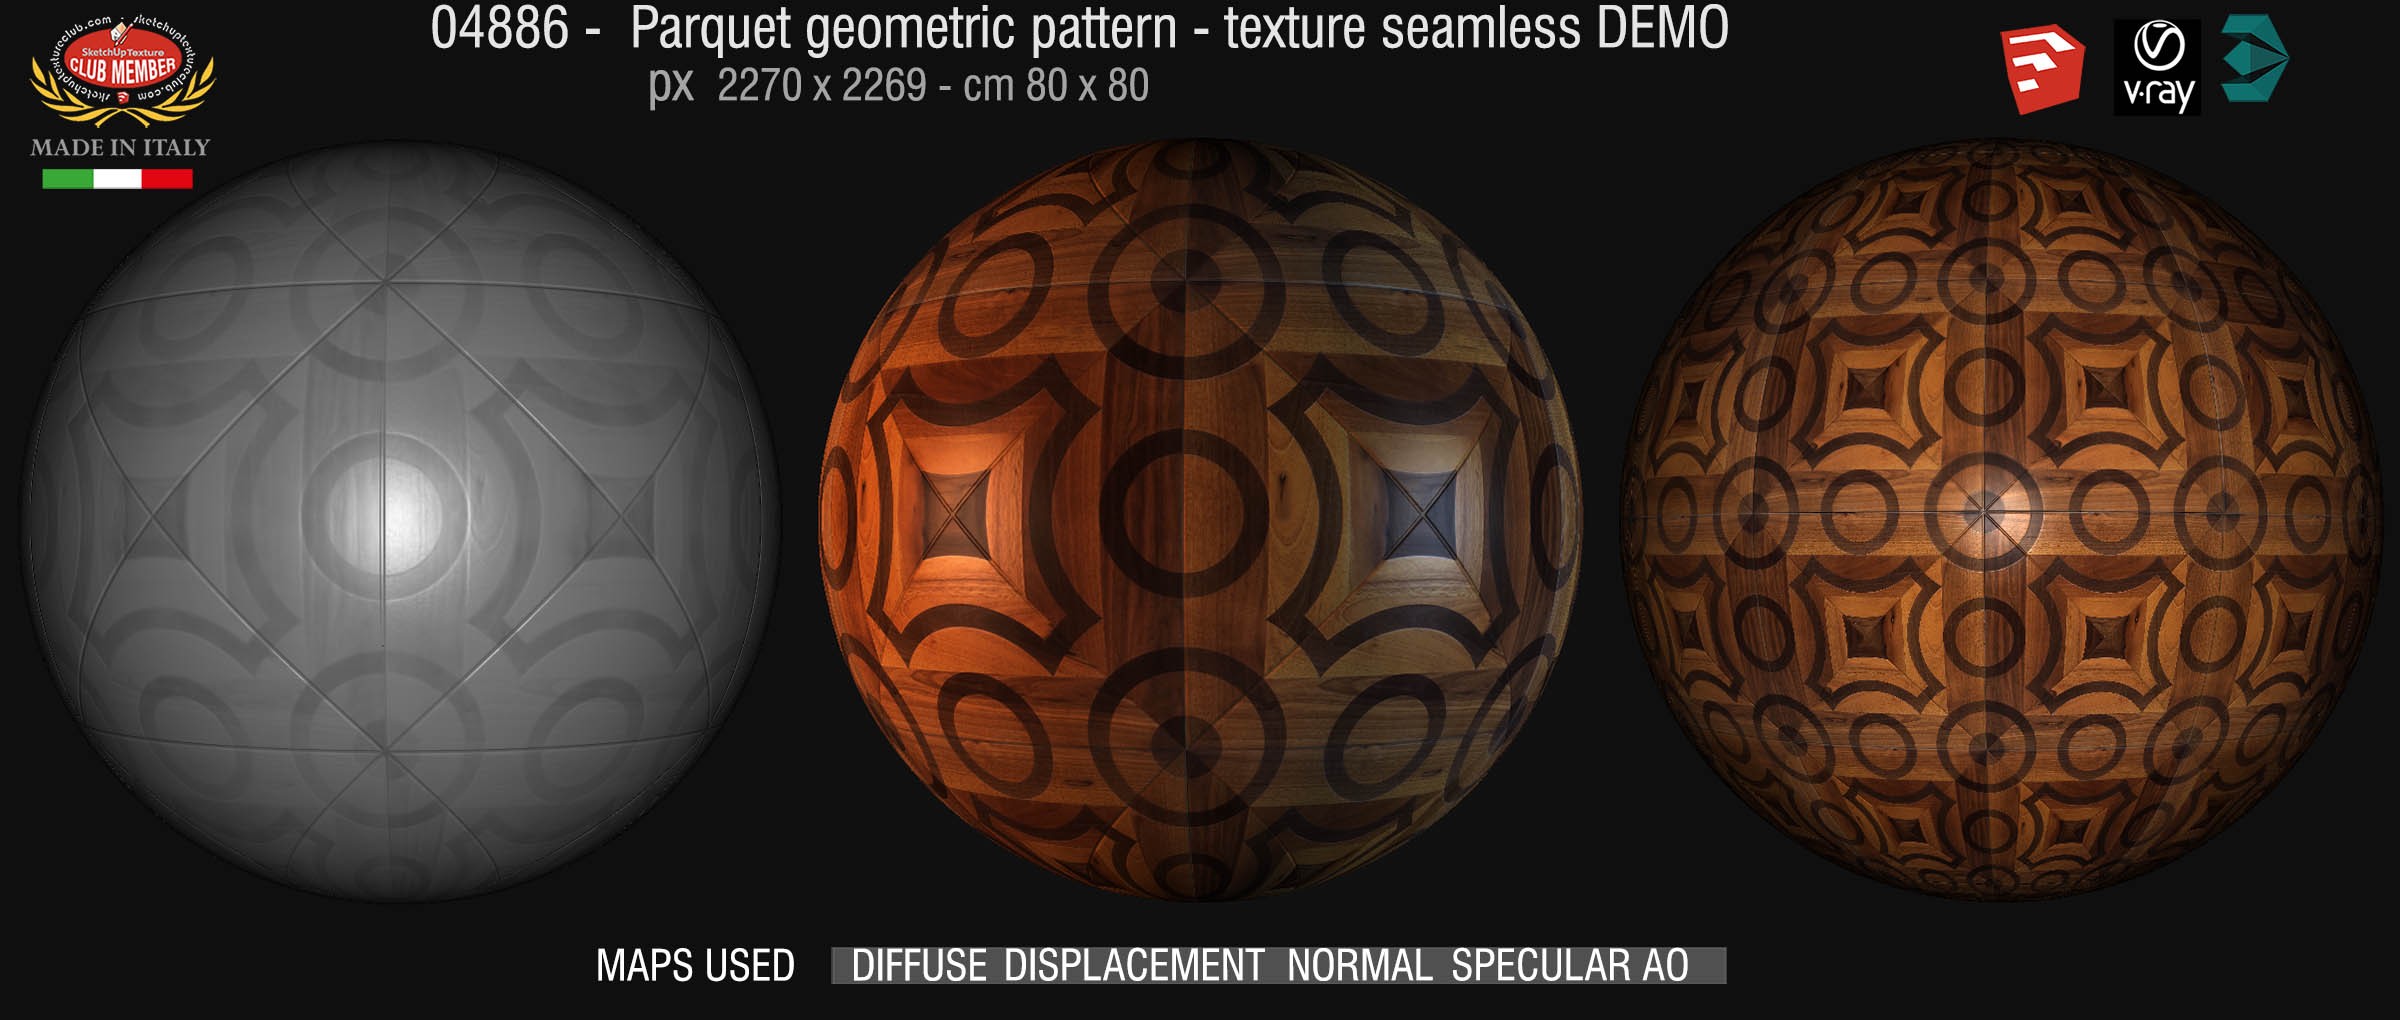 04886 Parquet geometric pattern texture seamless + maps DEMO